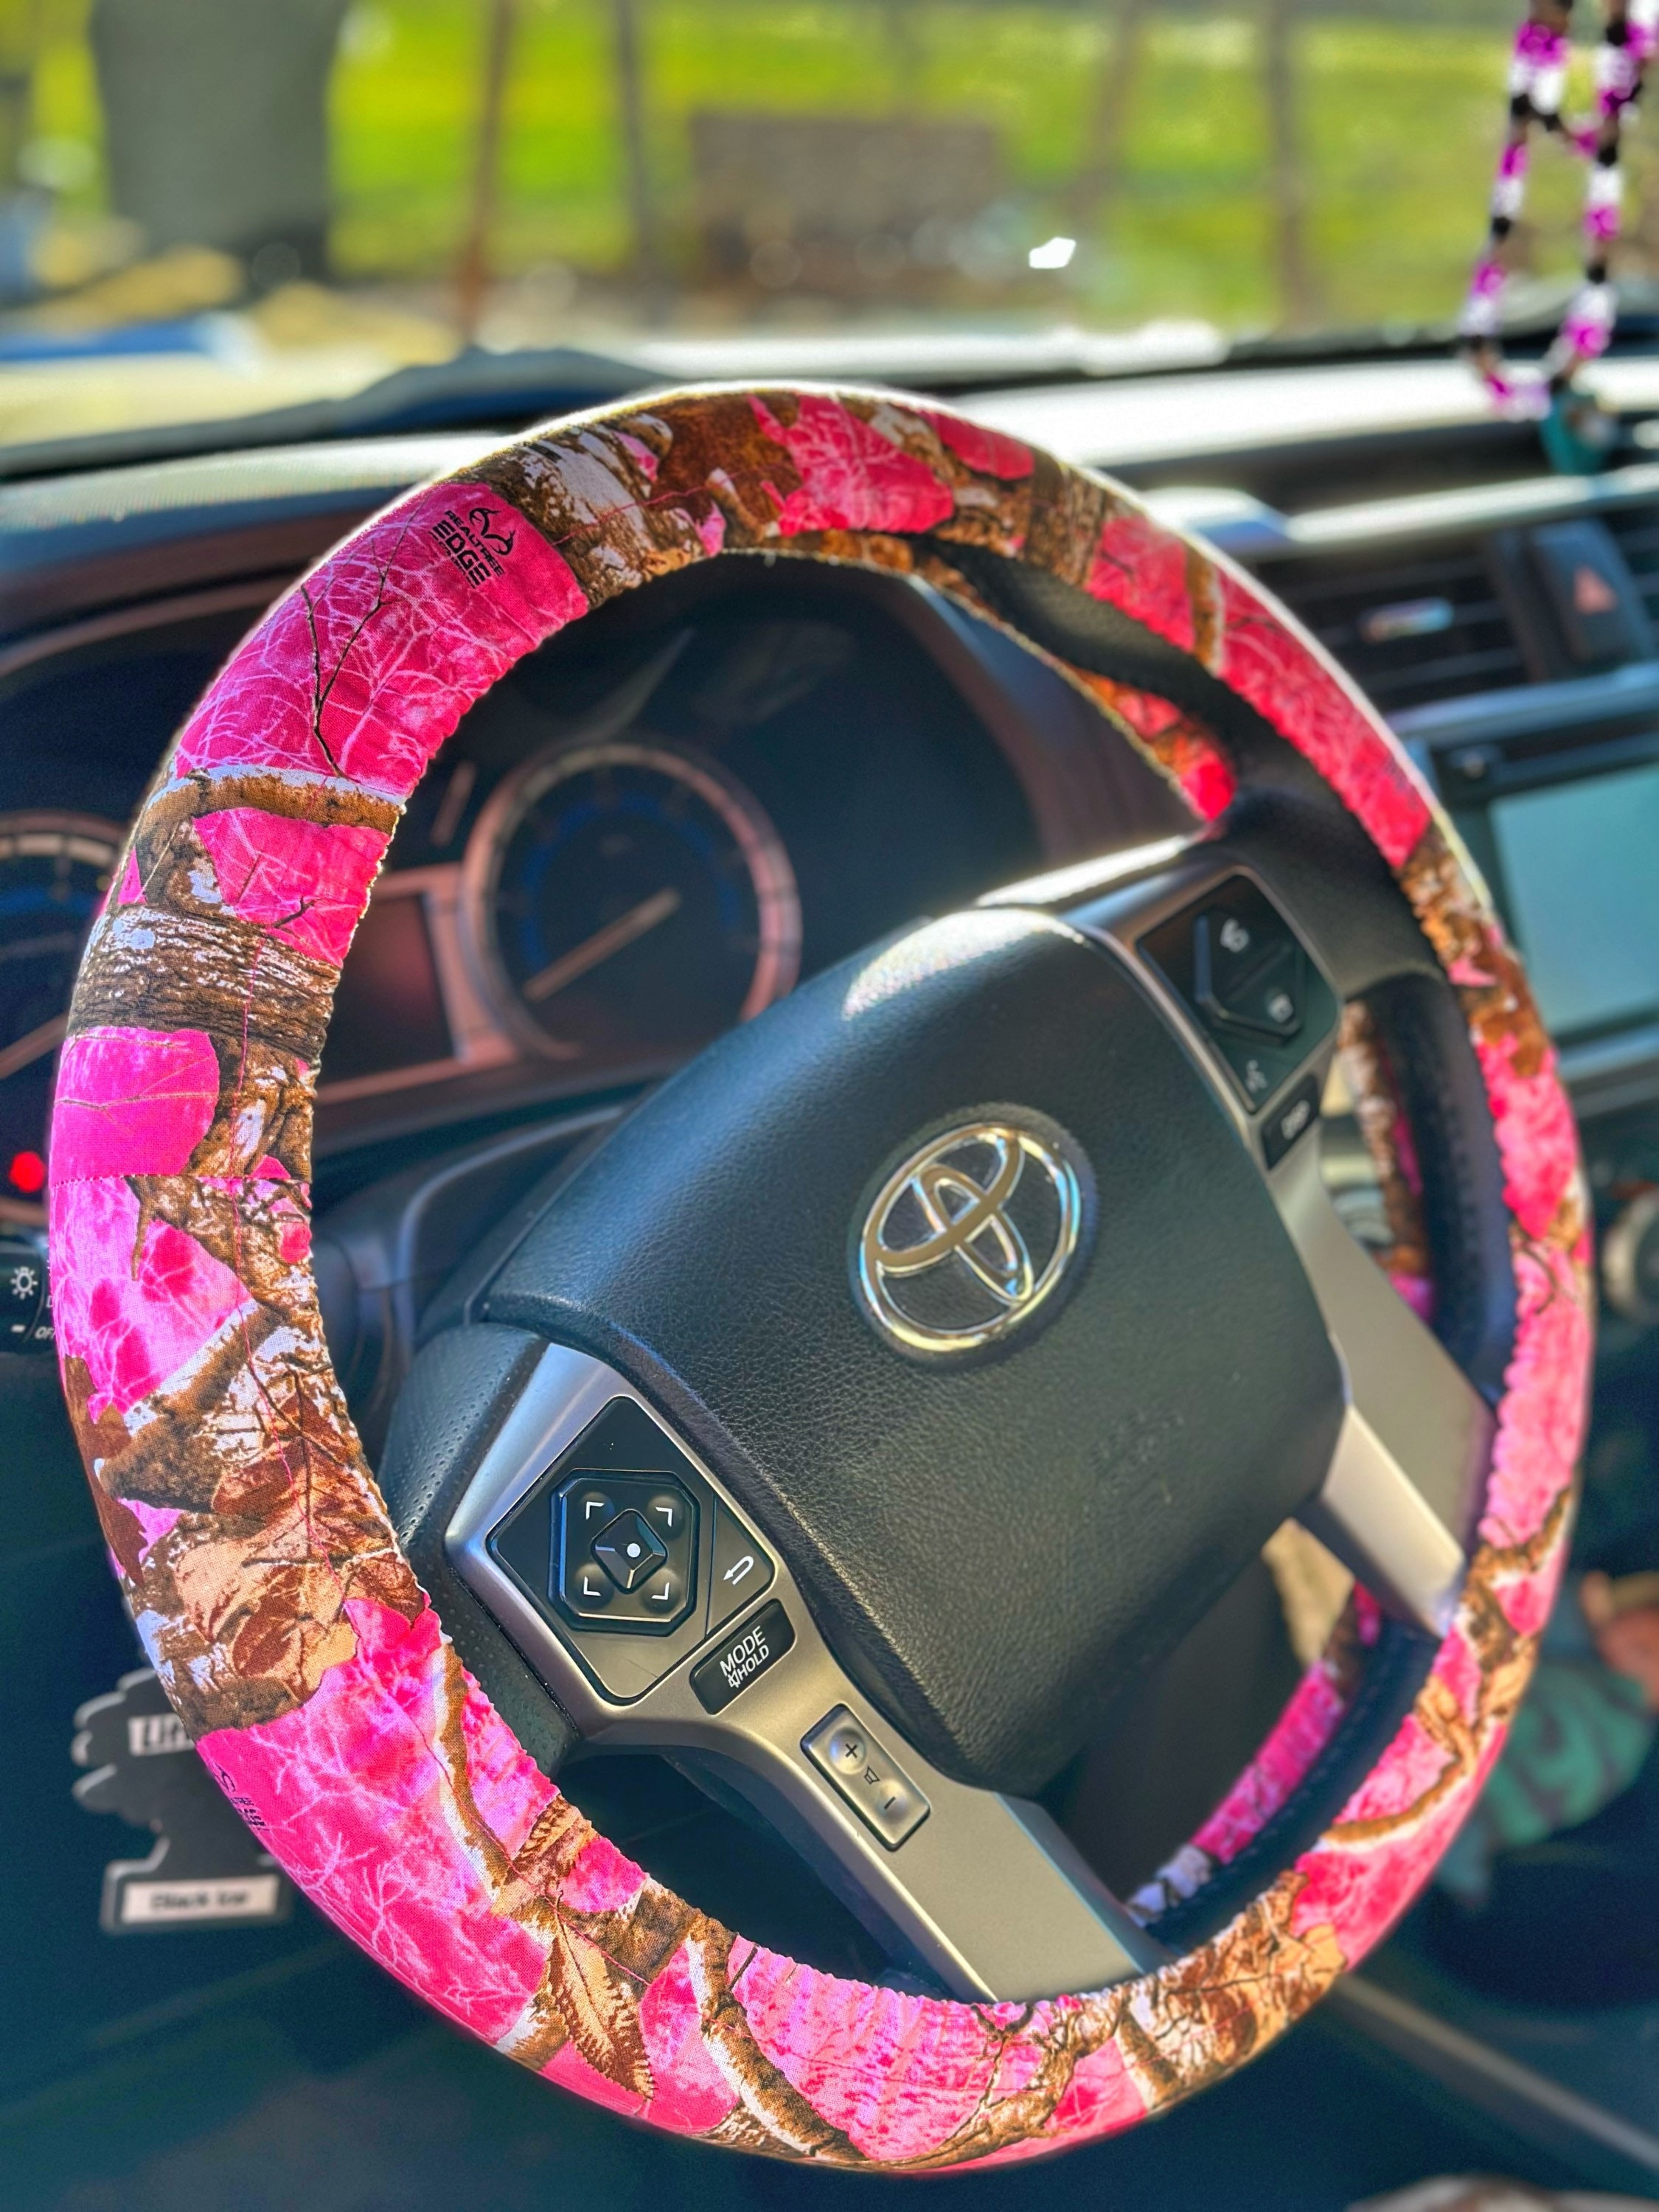 Camo Steering Wheel Covers